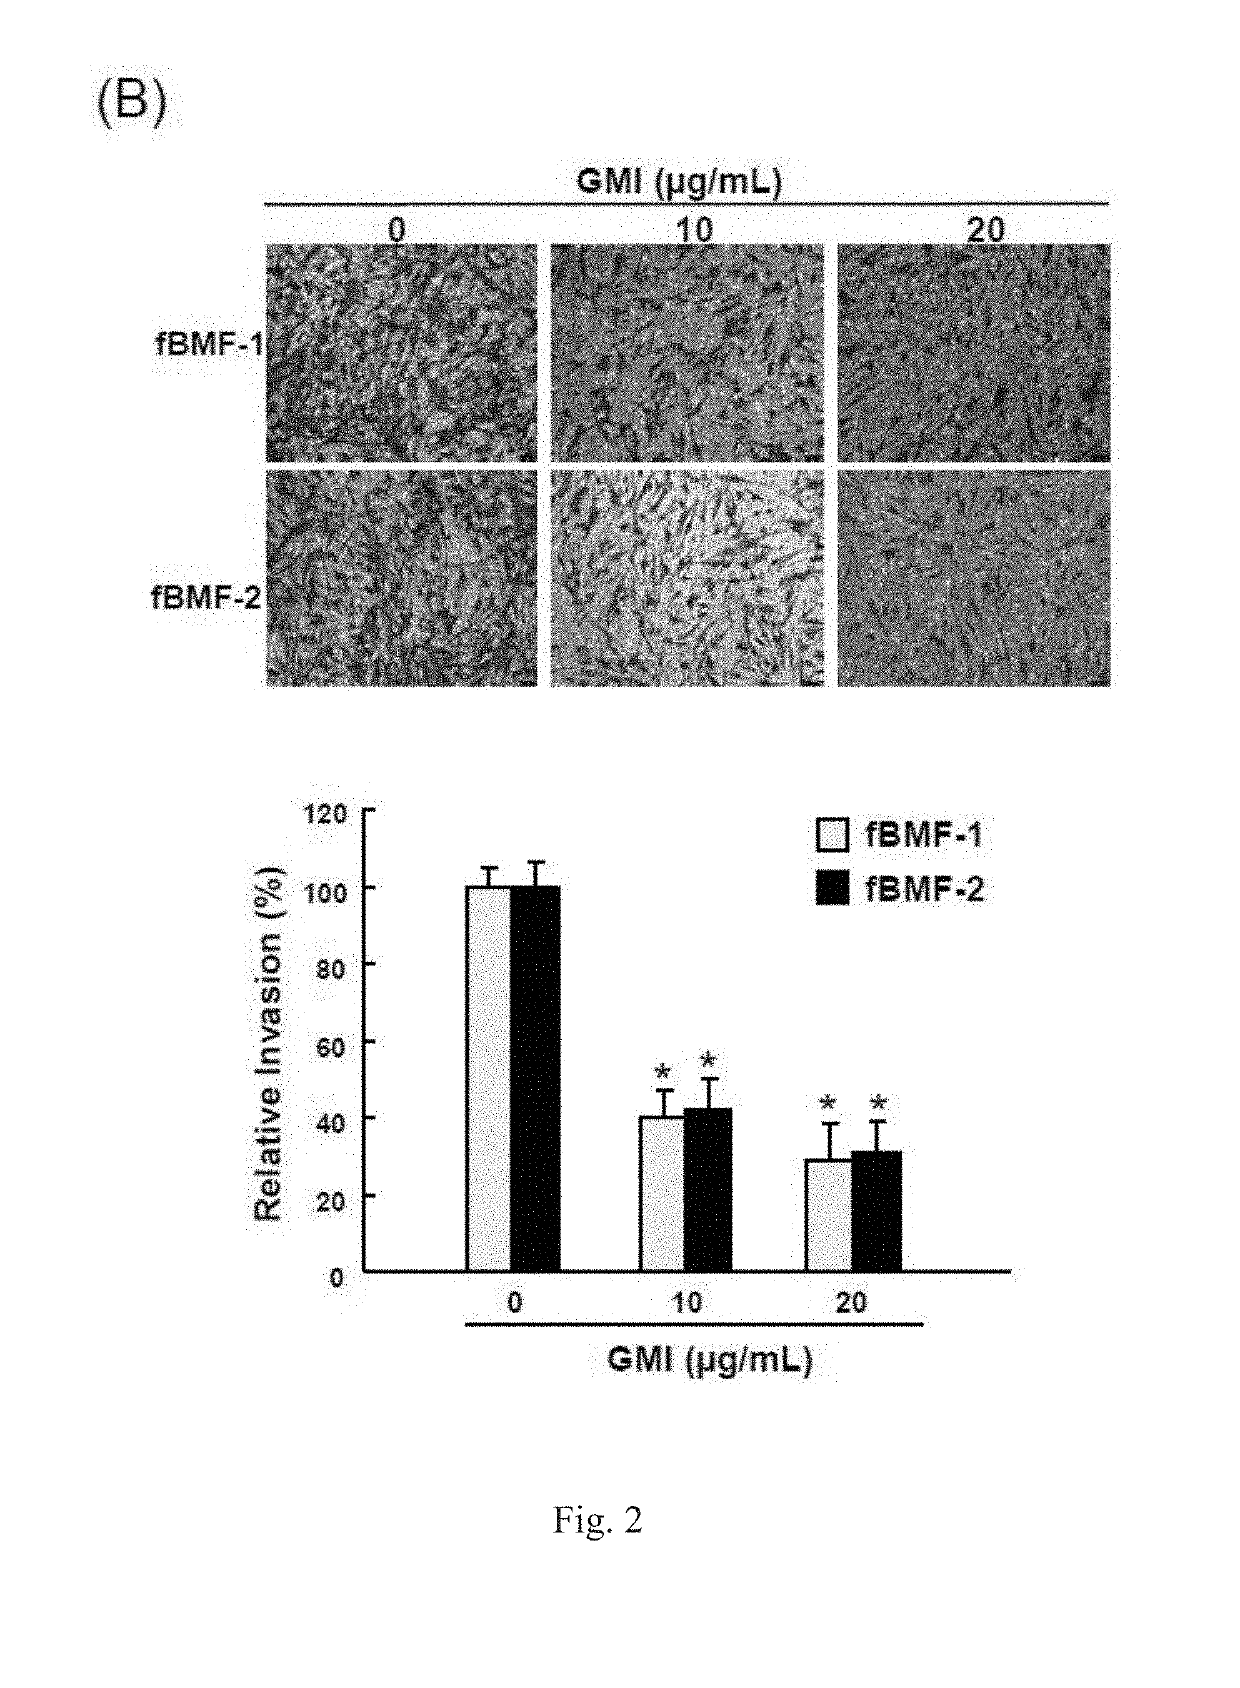 Use of immunomodulatory protein from ganoderma in inhibiting fibrosis